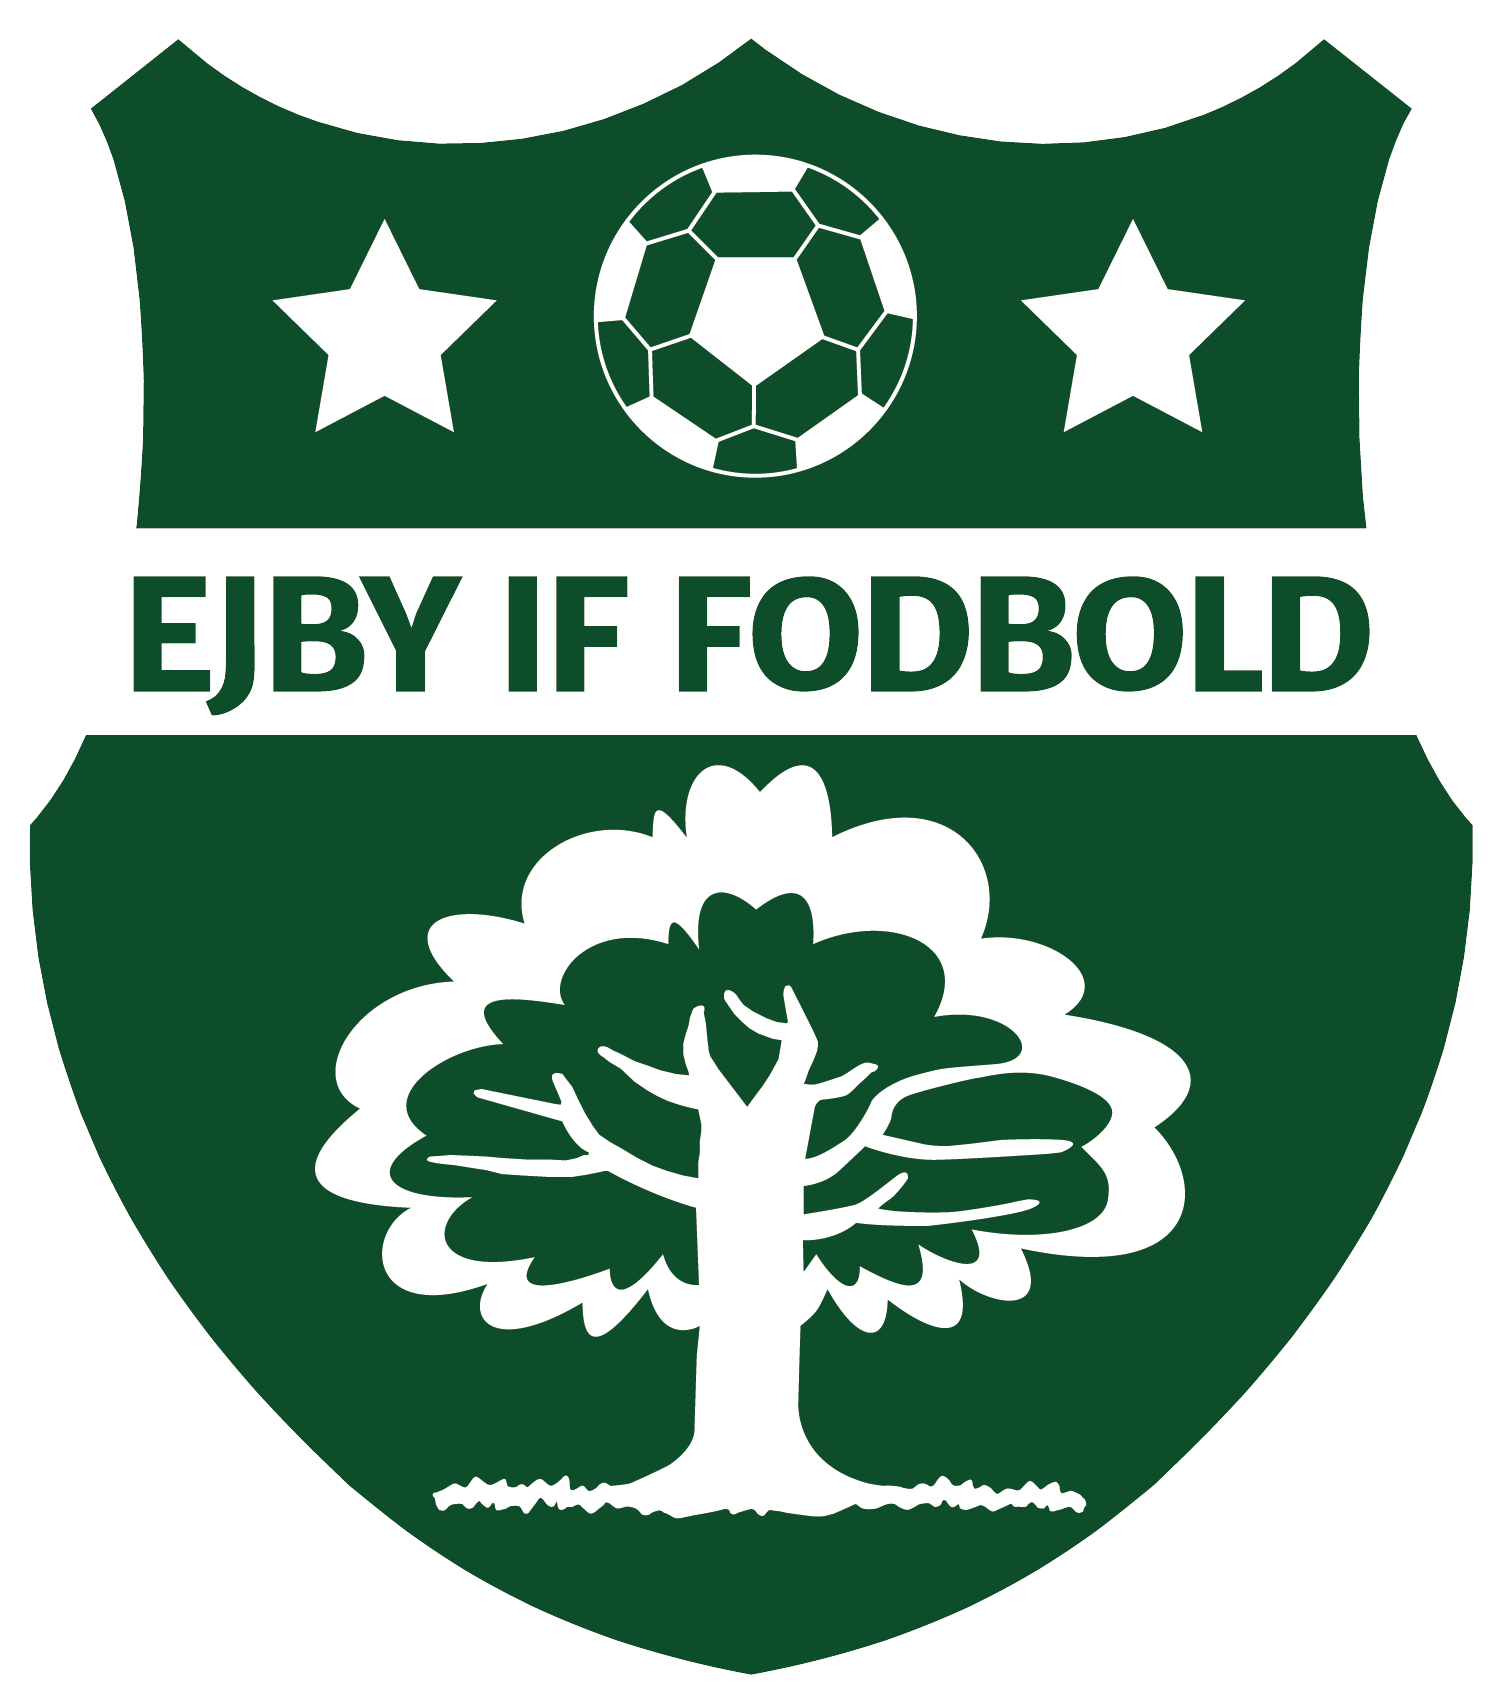 Ejby IF Fodbold